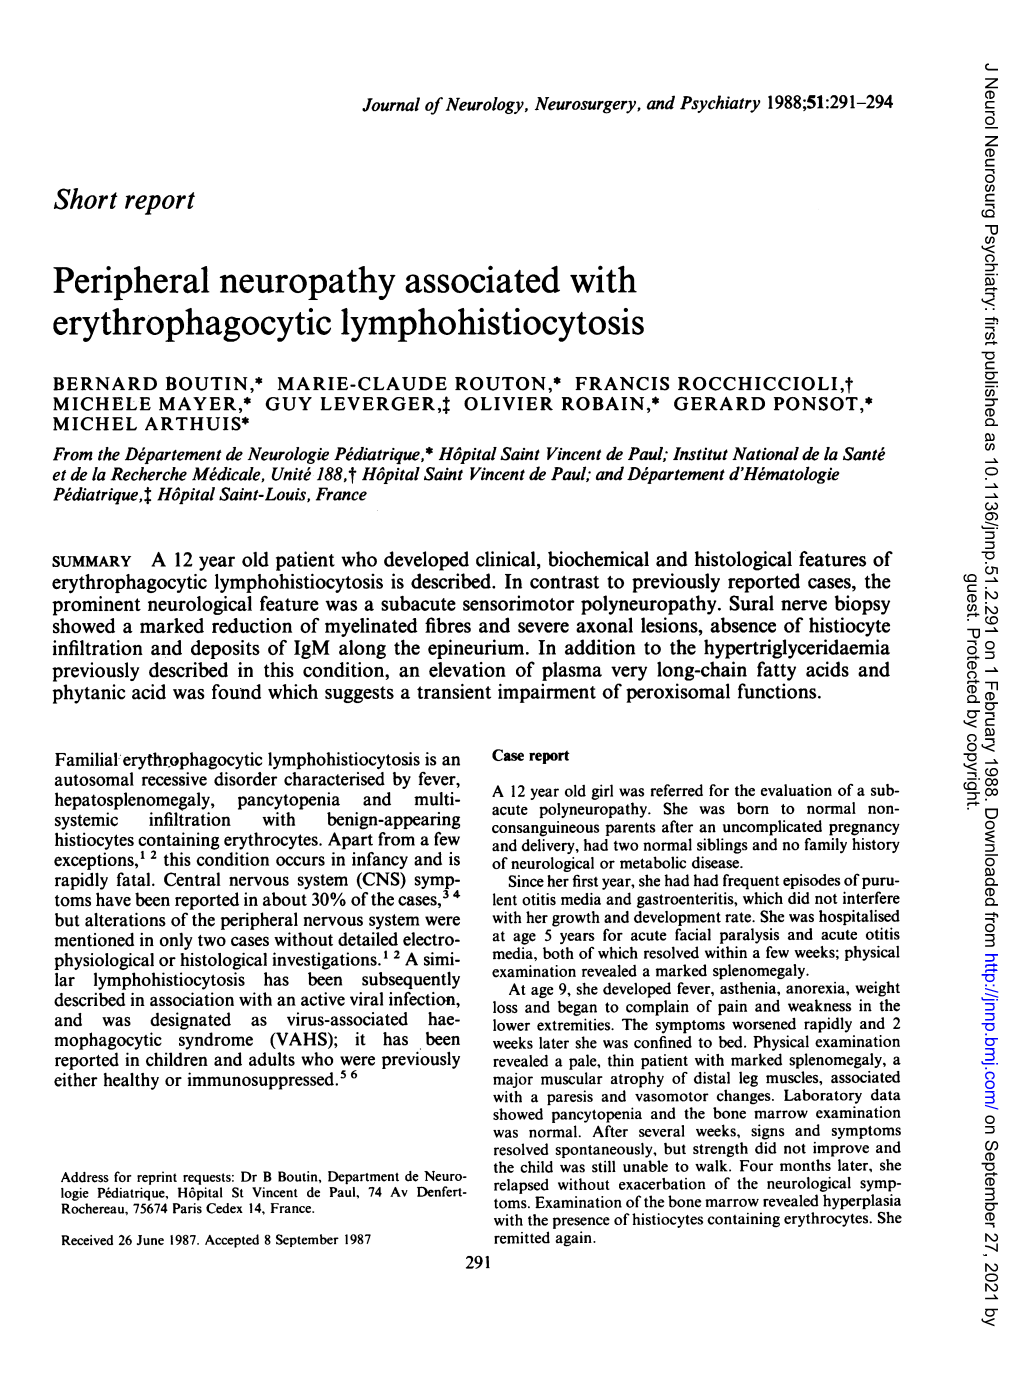 Peripheral Neuropathy Associated with Erythrophagocytic Lymphohistiocytosis